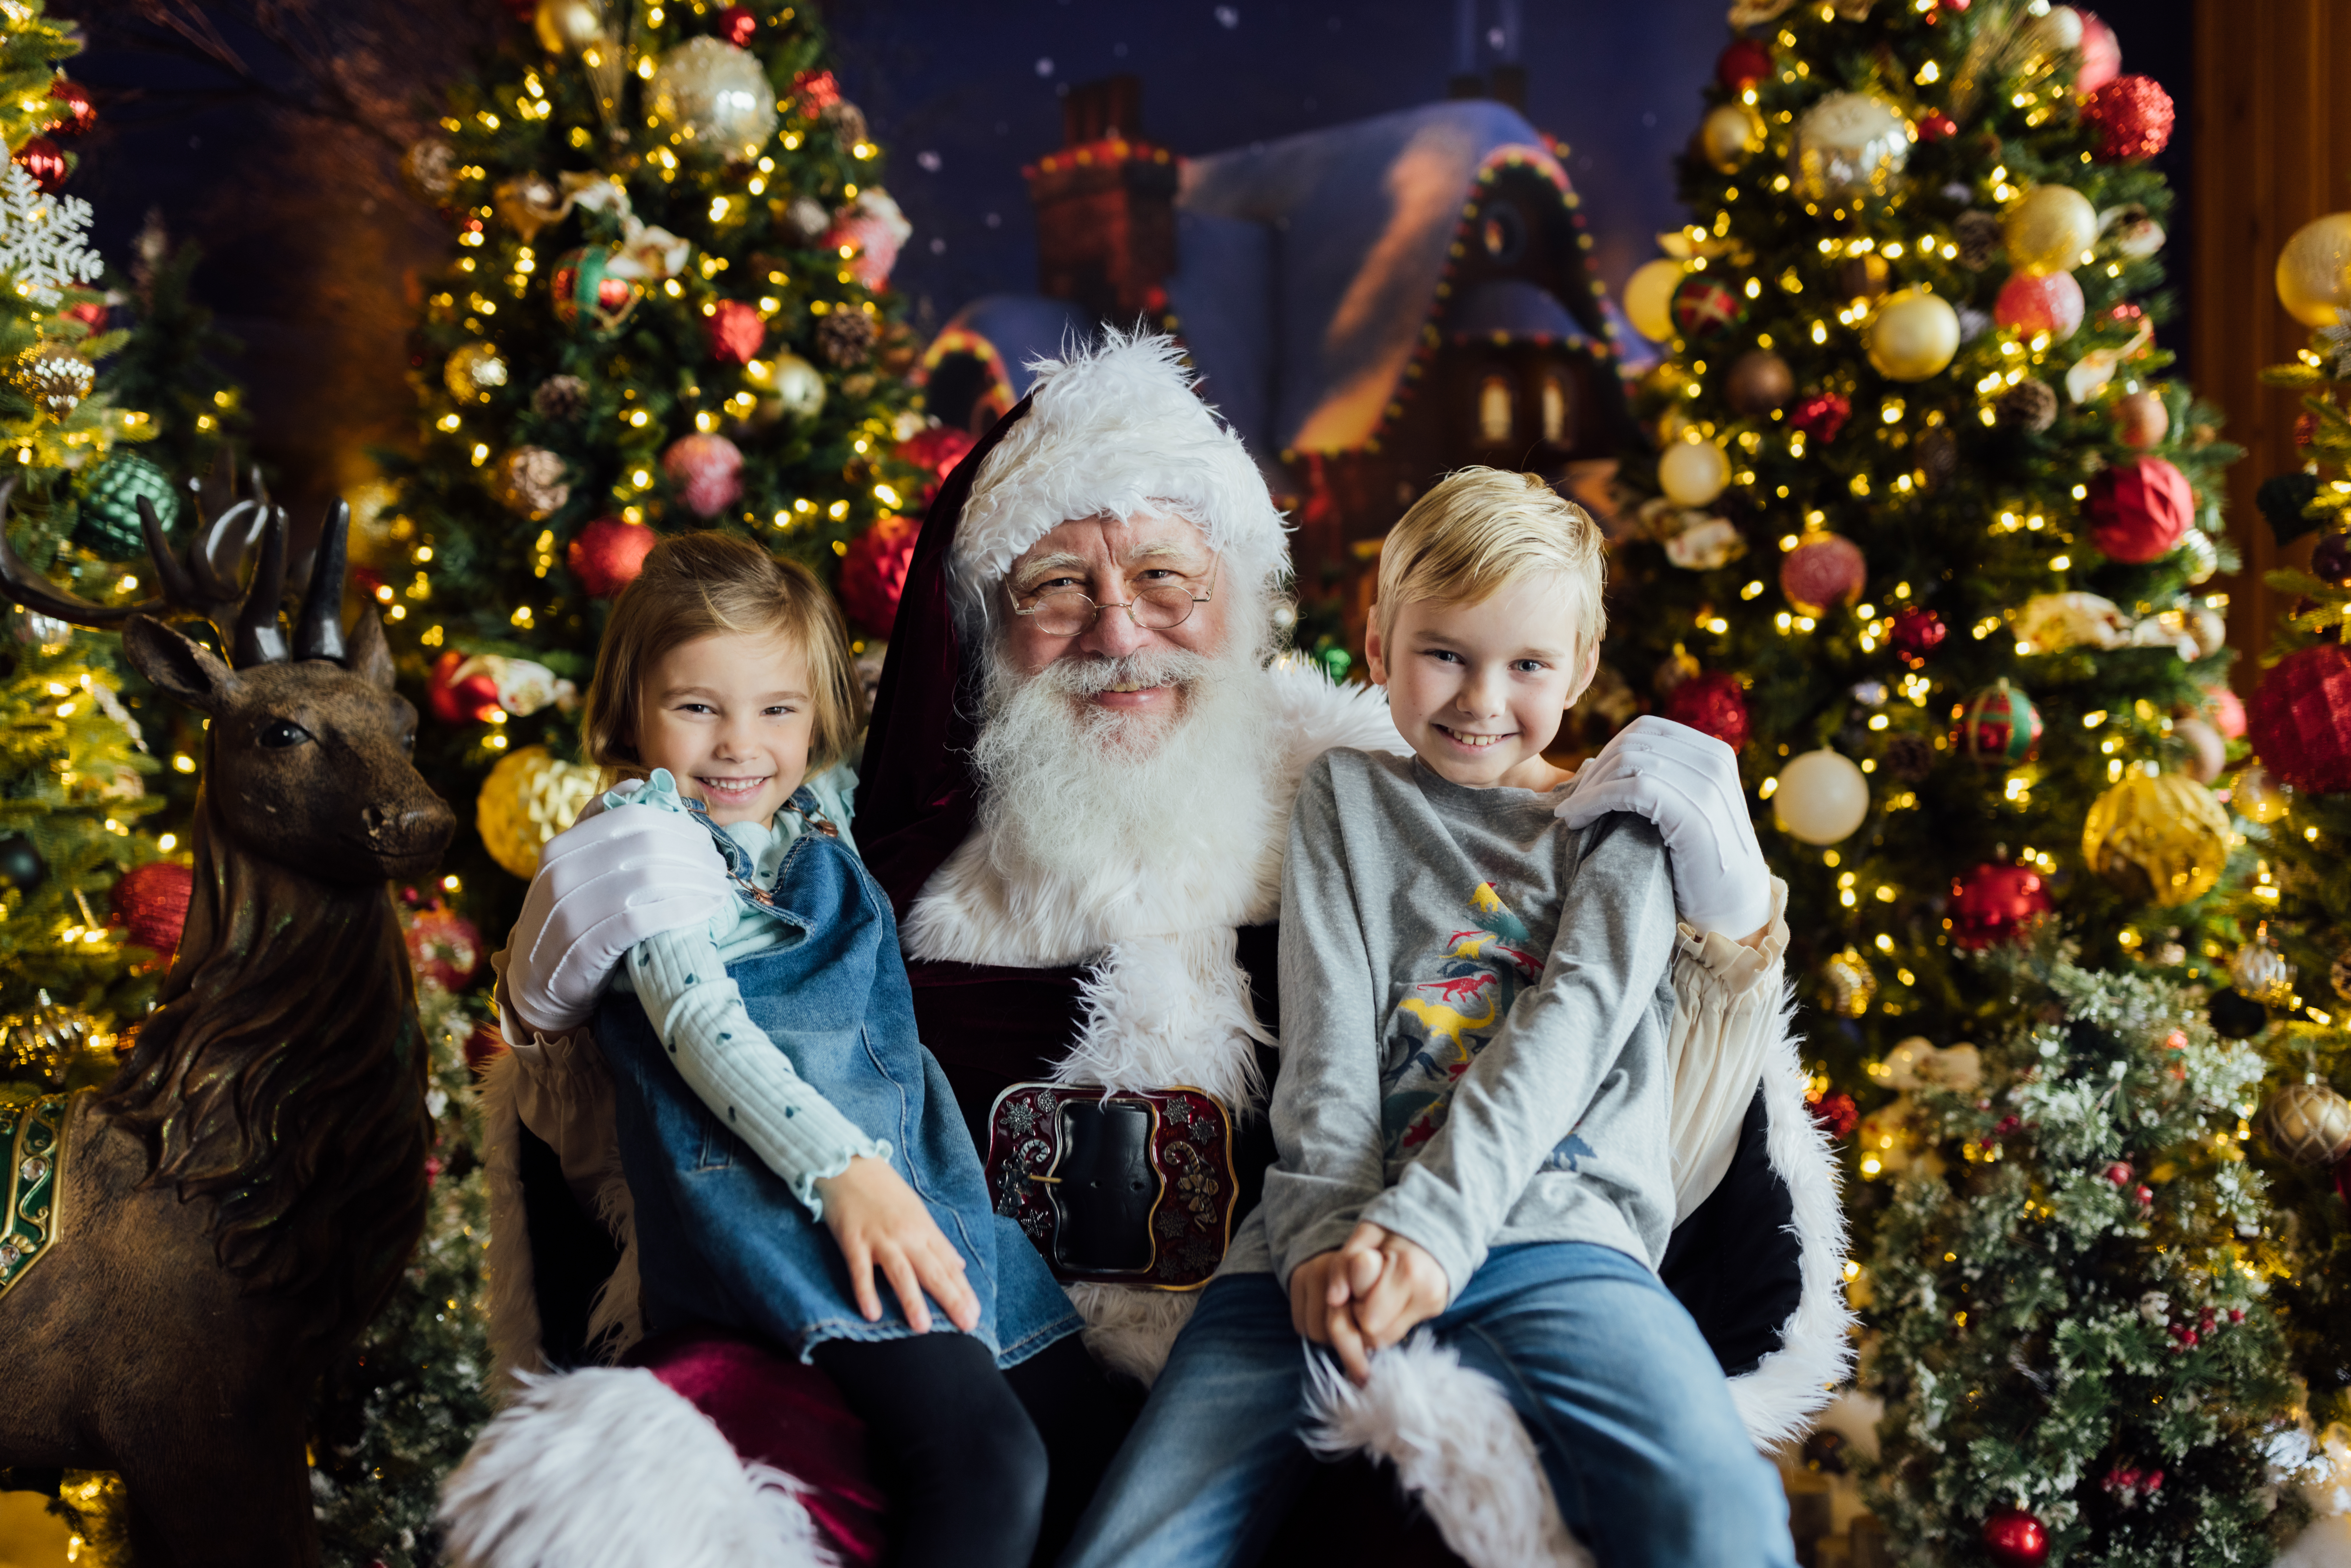 Two children sit on santa's lap, smiling